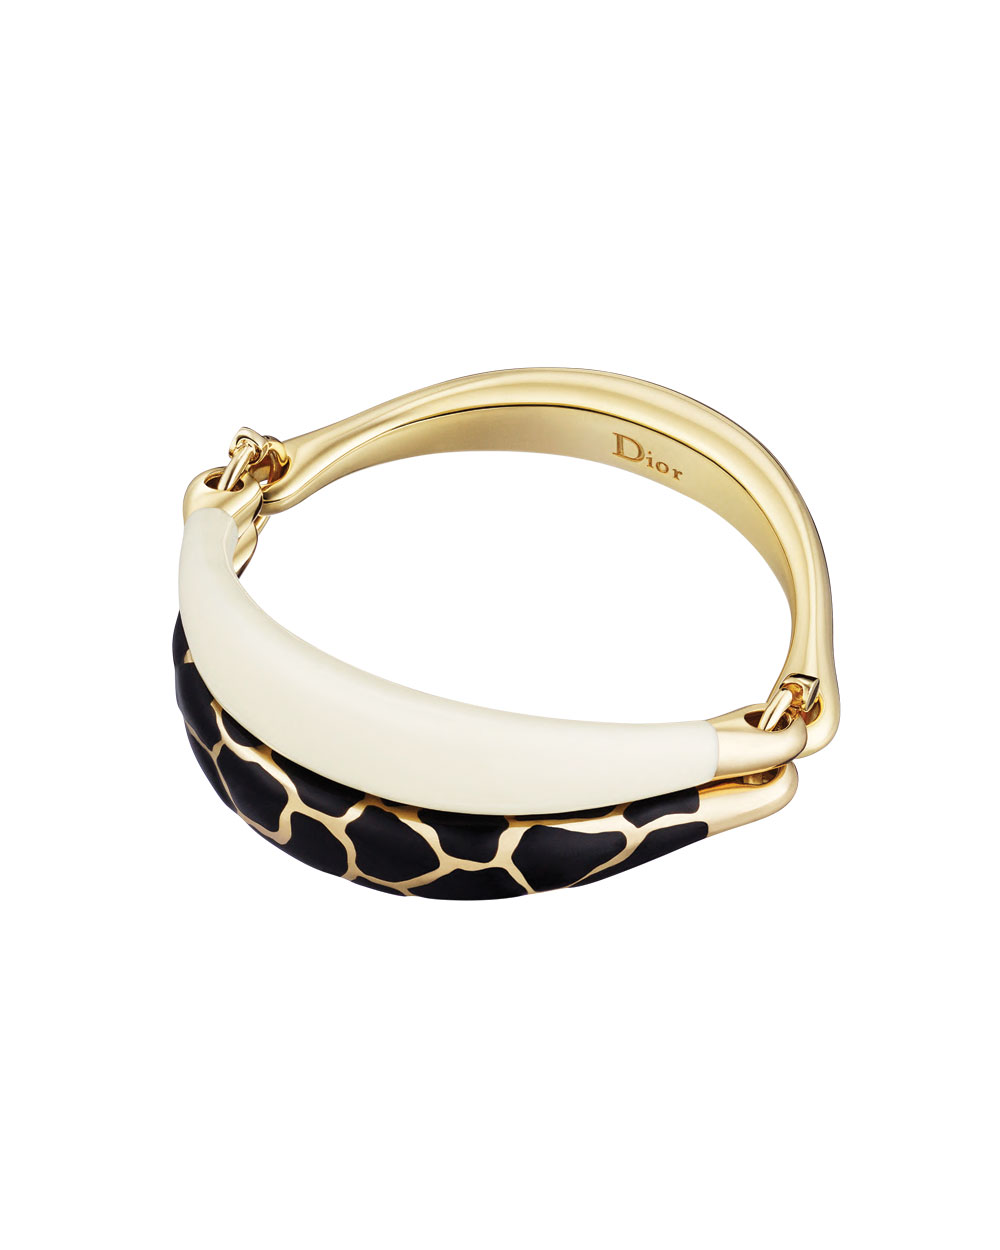 Christian Dior bracelet $1750